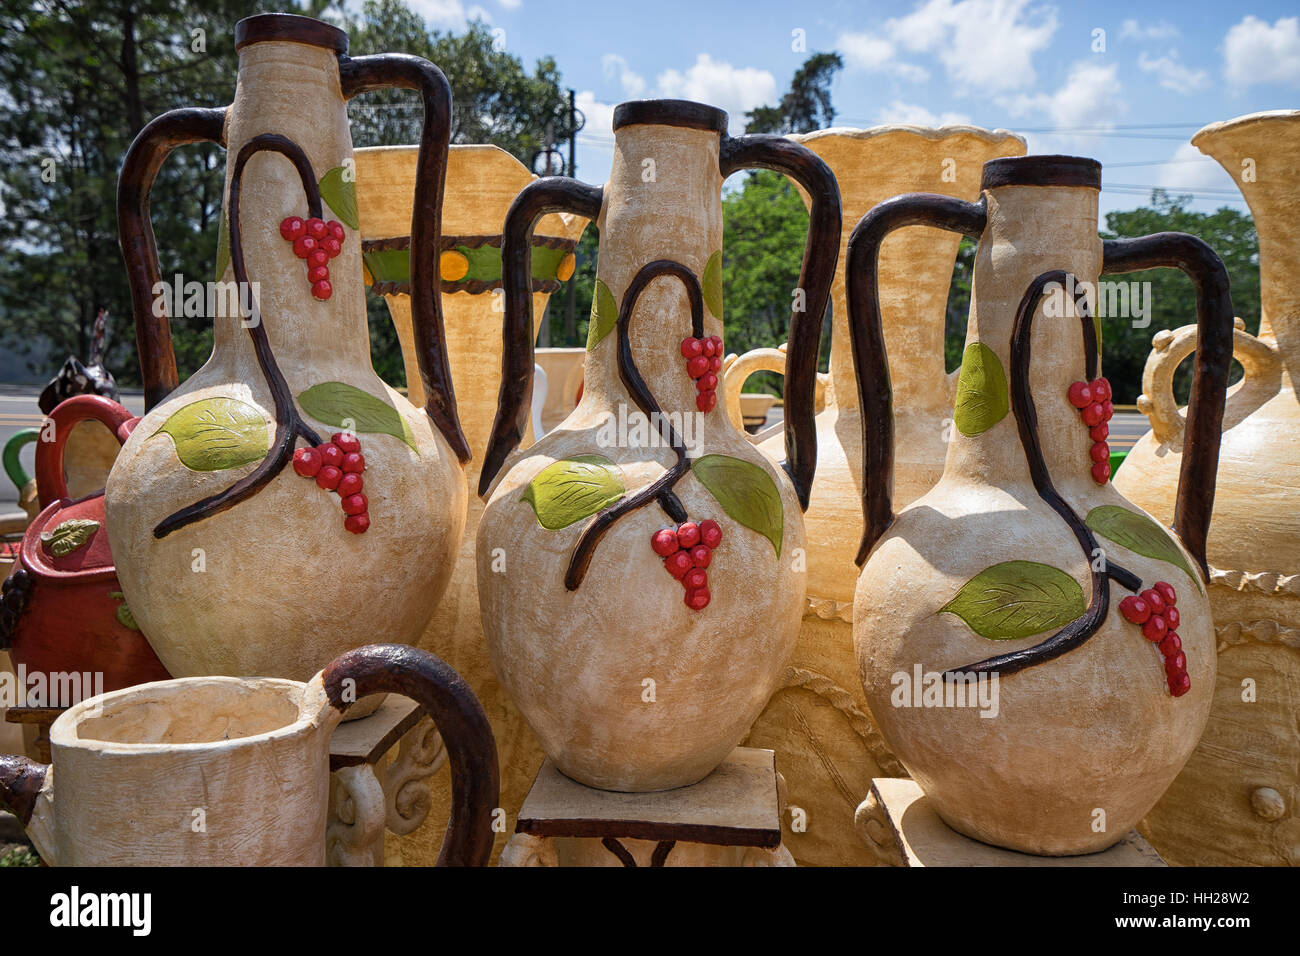 https://c8.alamy.com/compes/hh28w2/grandes-jarrones-decorativos-de-ceramica-alfareria-stand-en-honduras-hh28w2.jpg